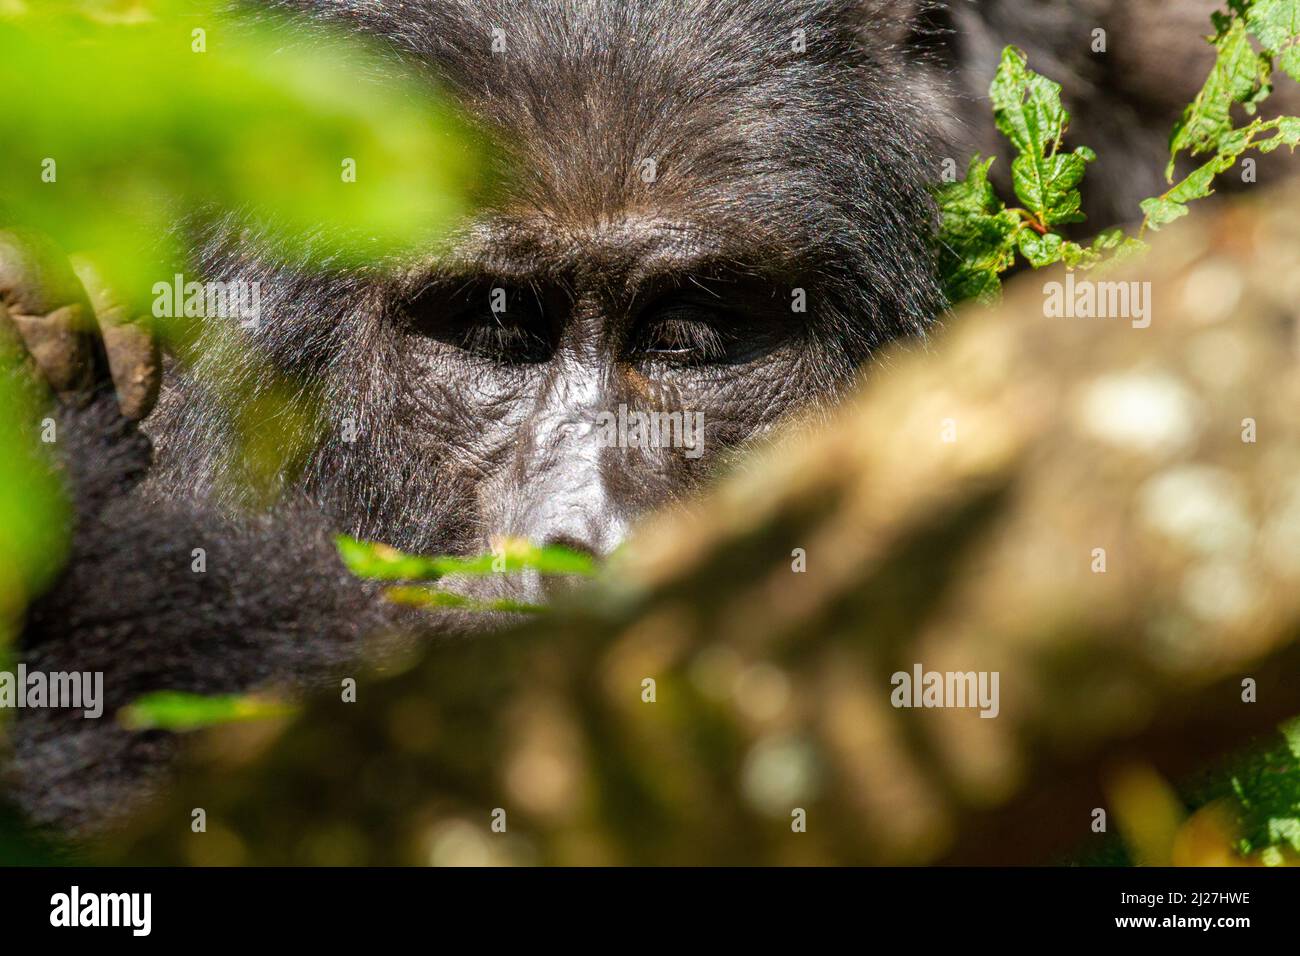 Gorilla portrait Stock Photo